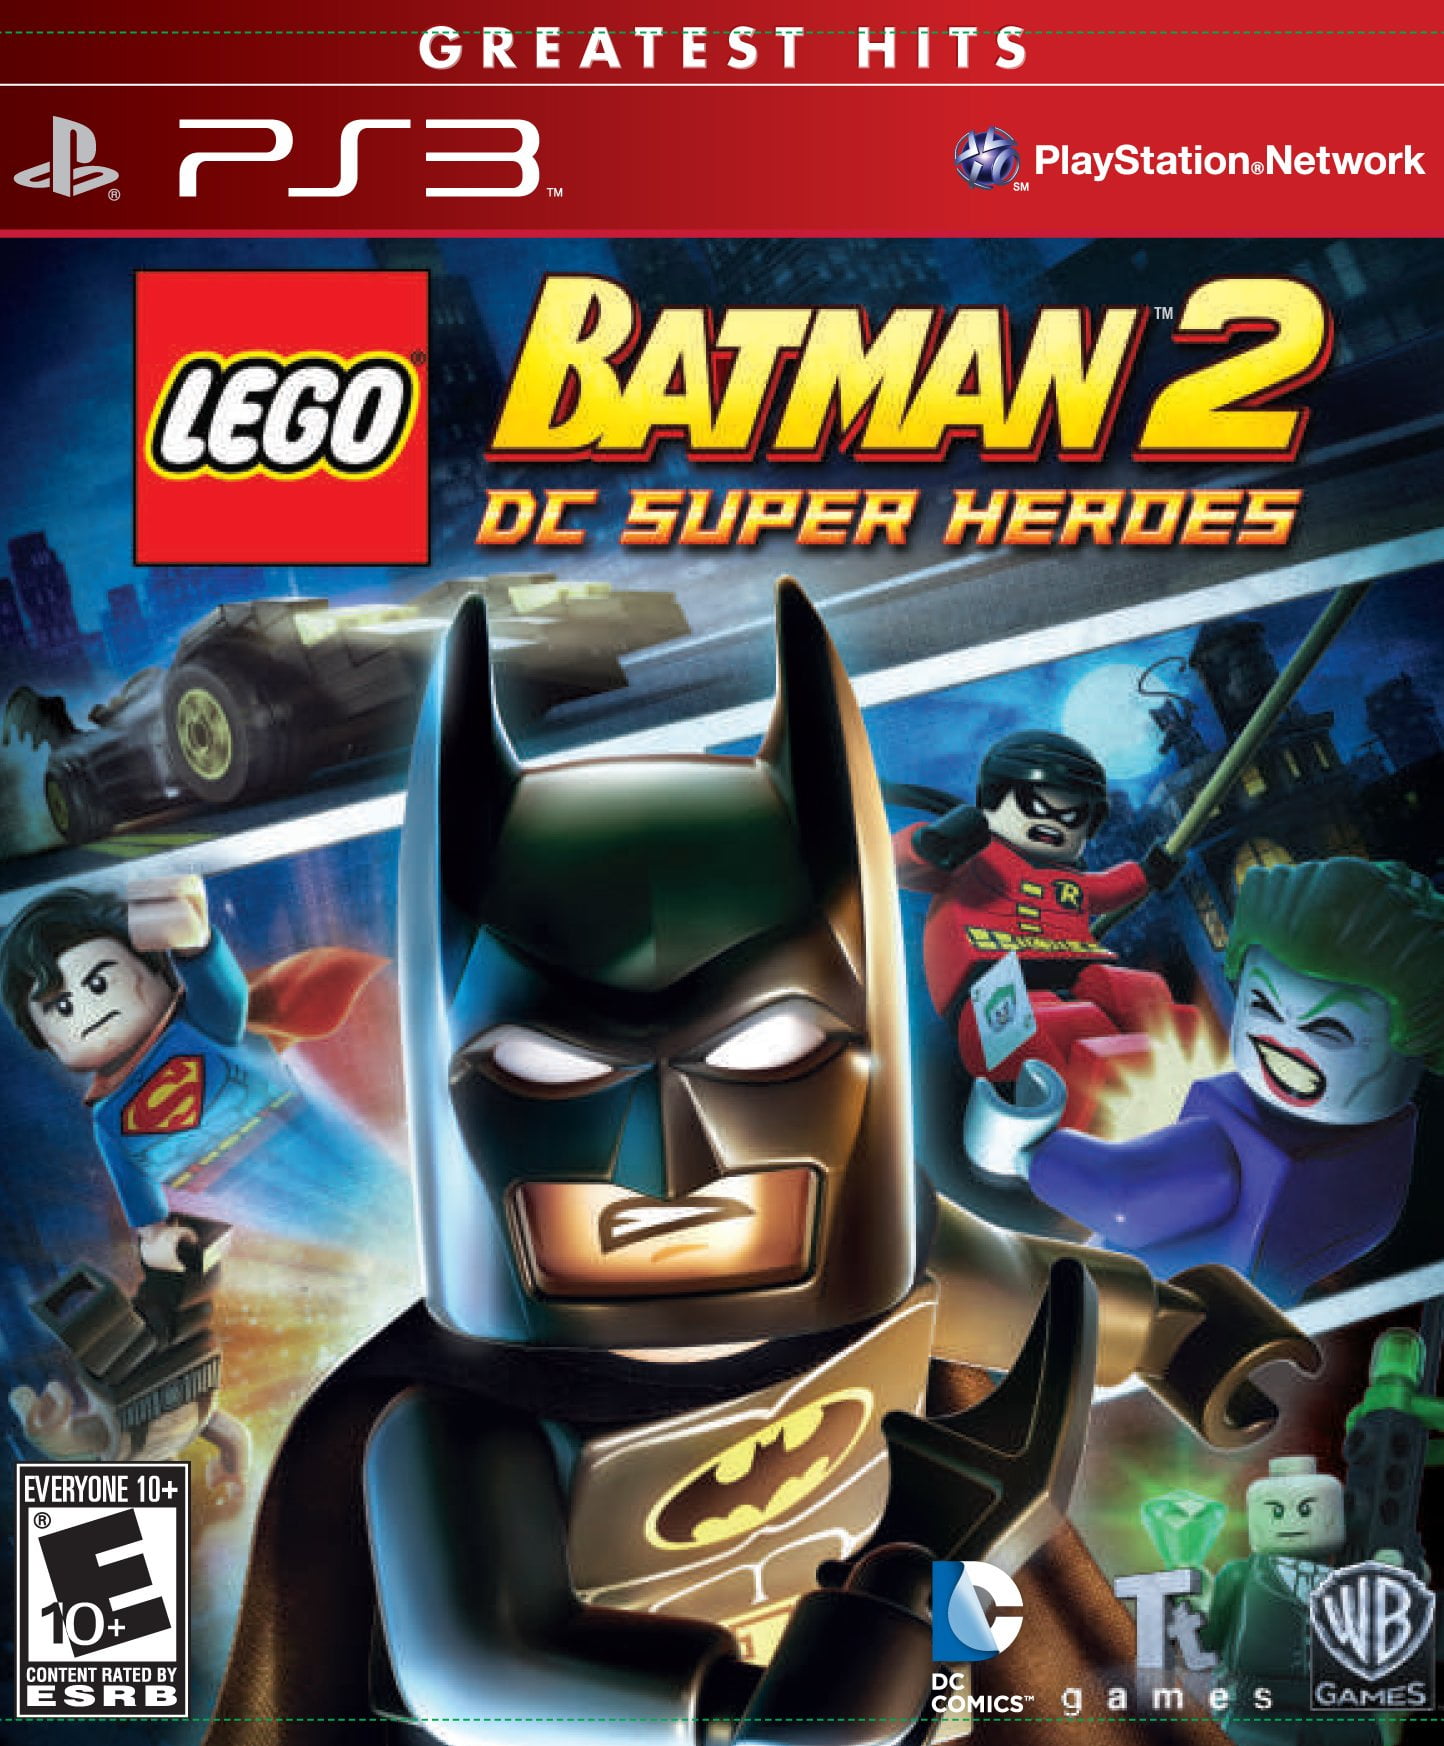 Lego Marvel Super Heroes 2 + Lego Batman 3 - Ps4 - Lacrados